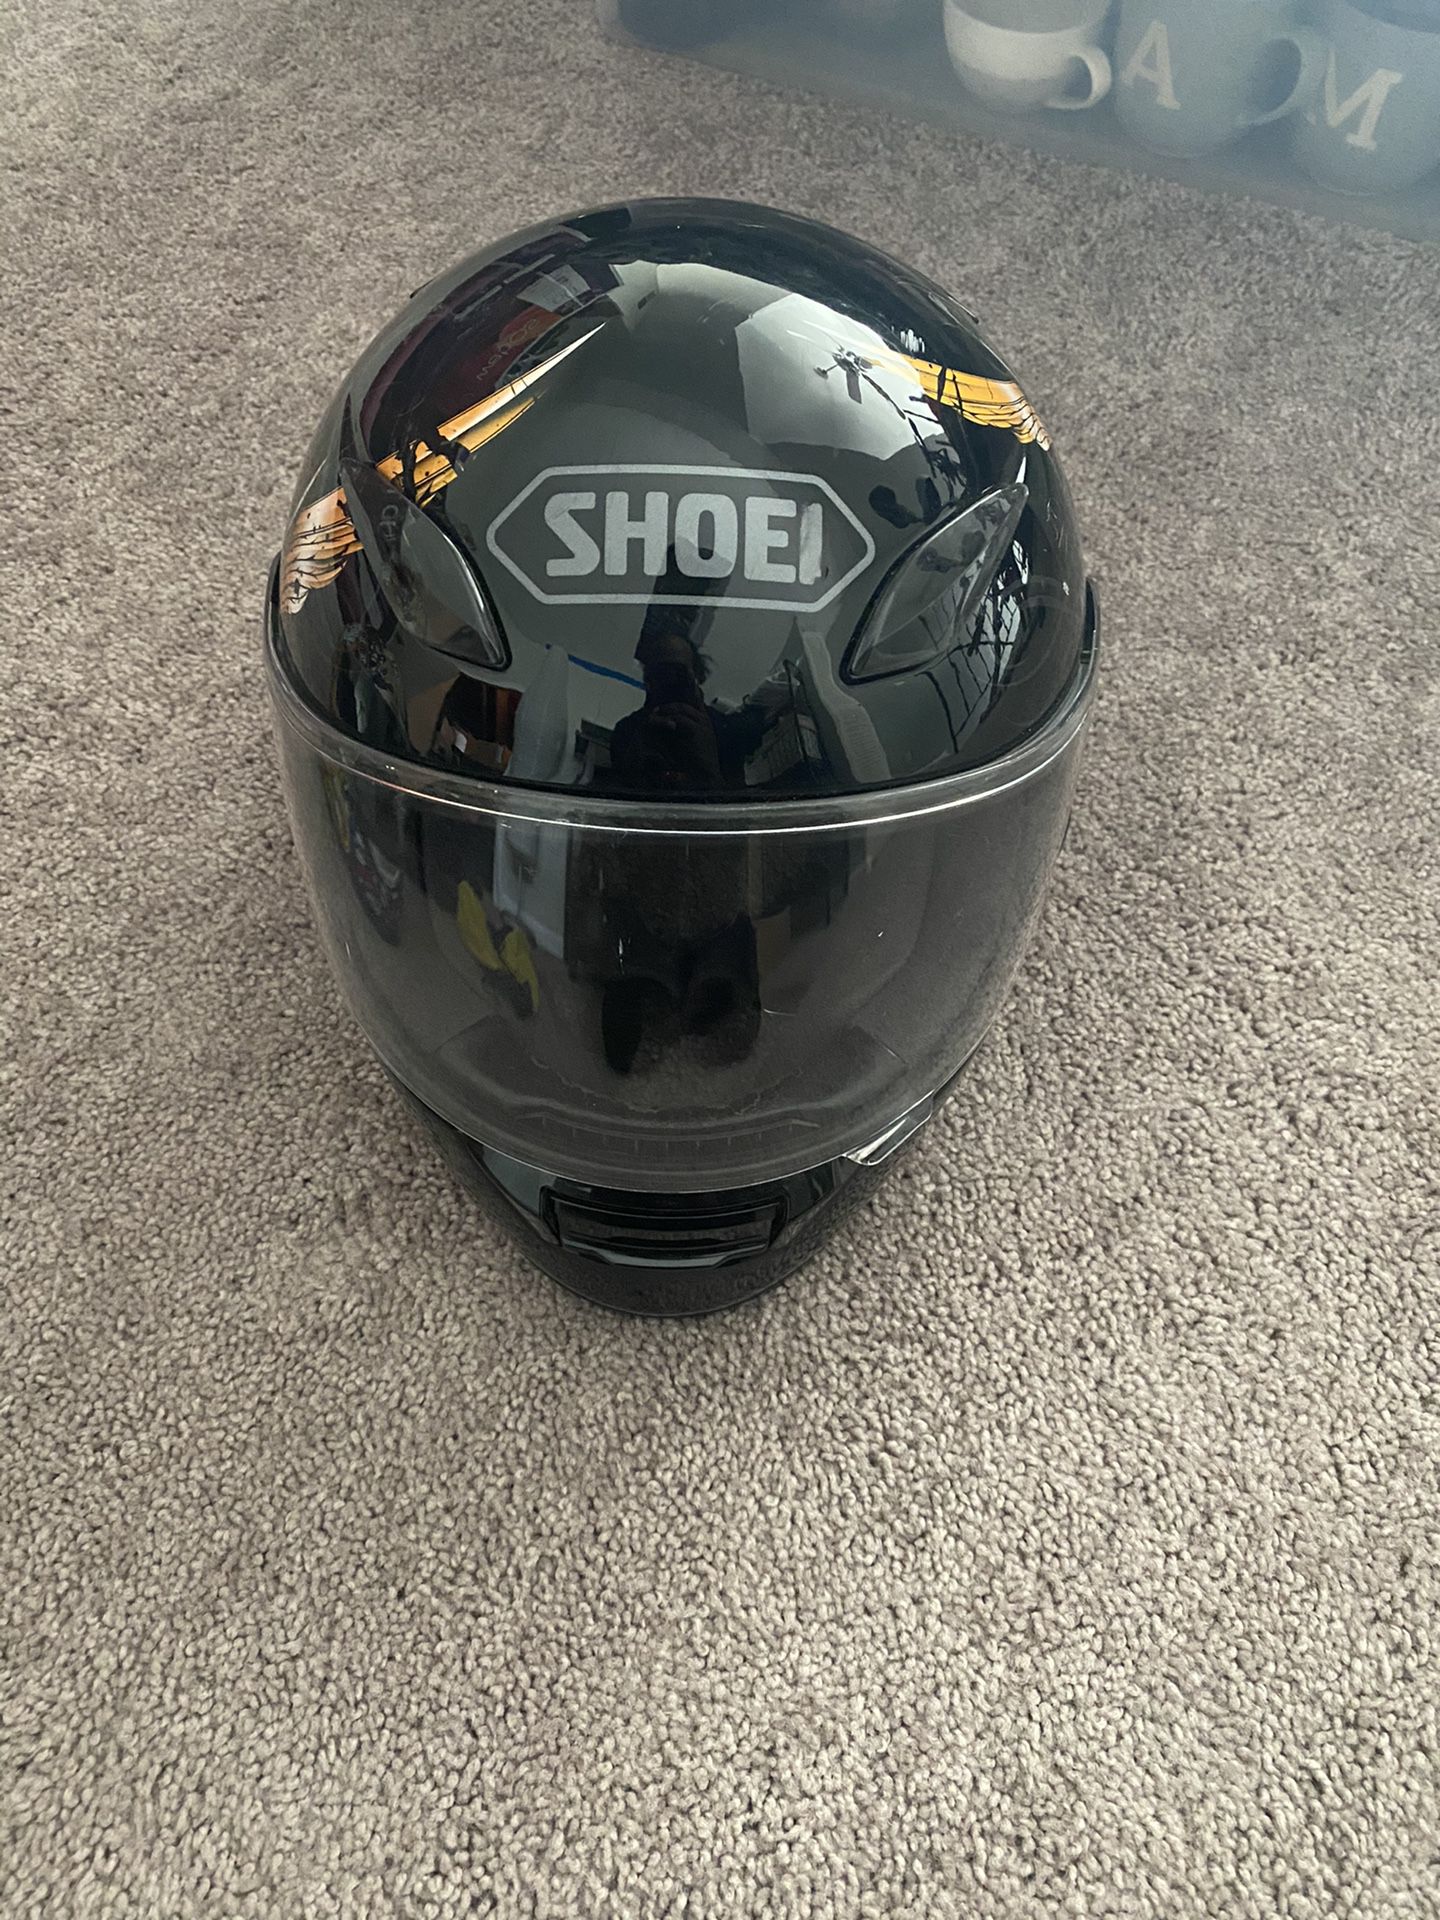 SHOEI and ICON motorcycle helmet